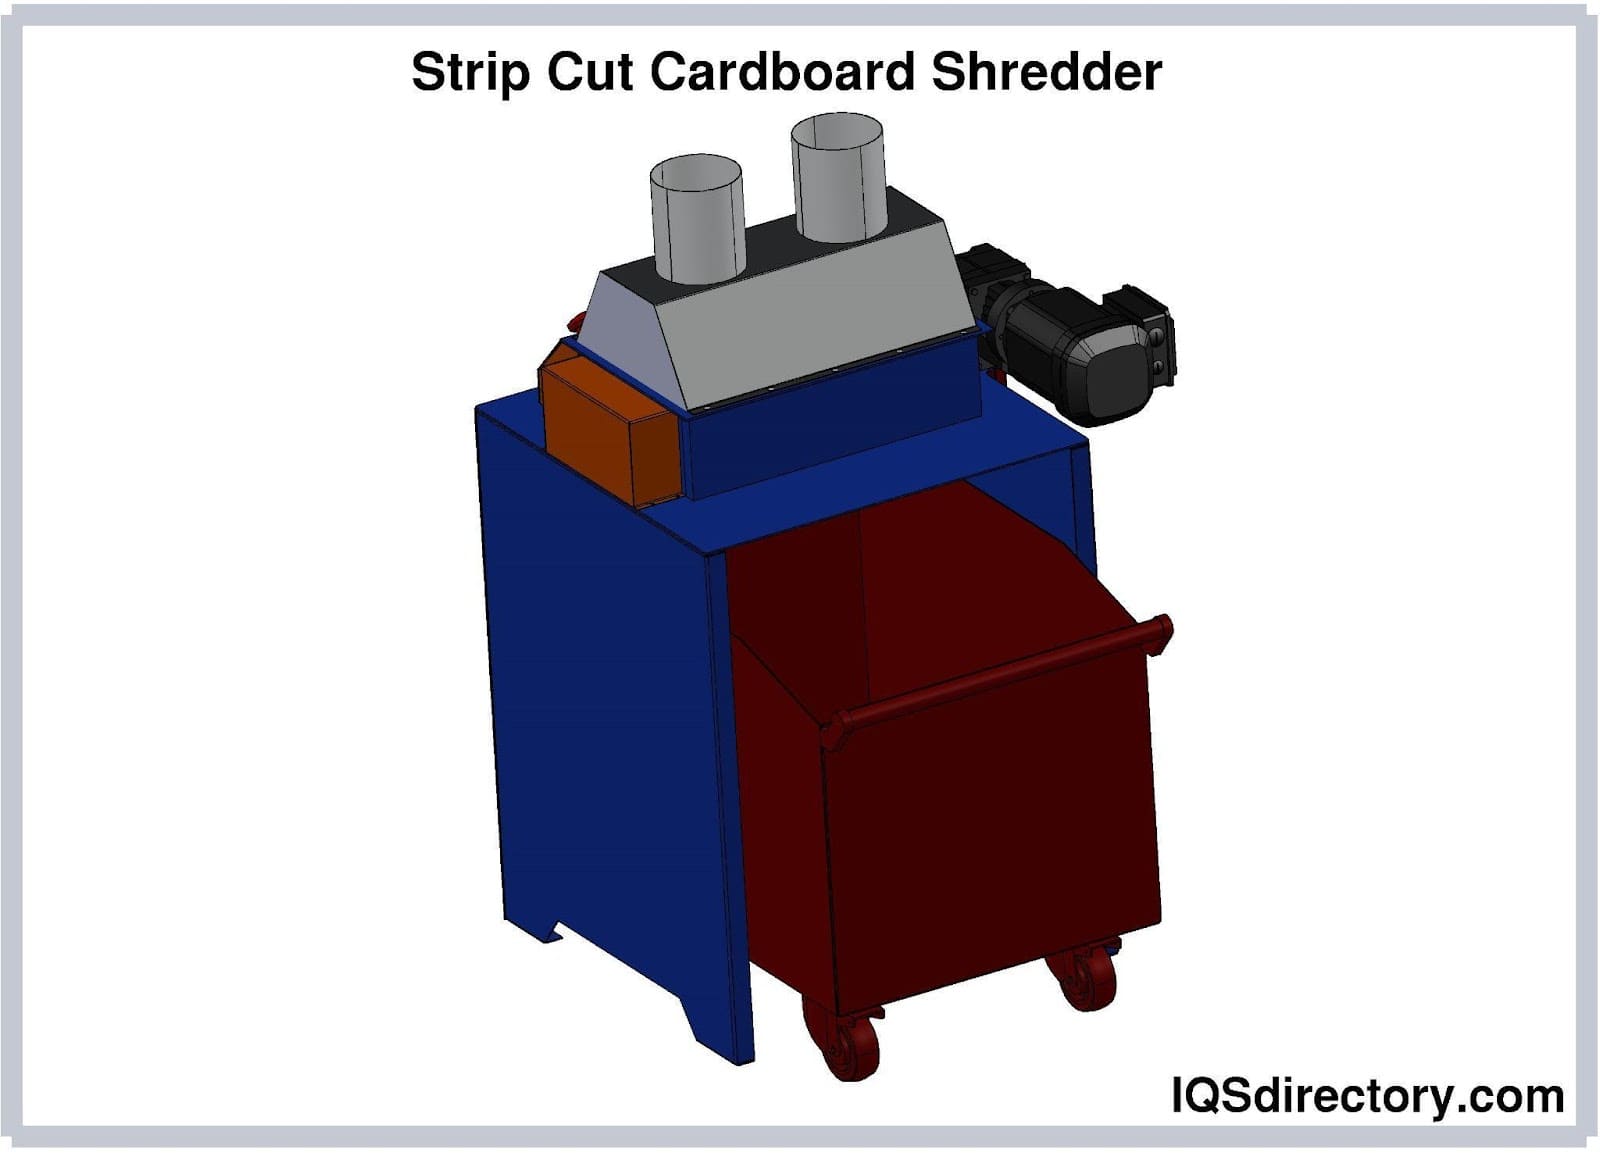 Machines :: Shredder :: Shredder Kits :: Complete Assembled Shredder Box